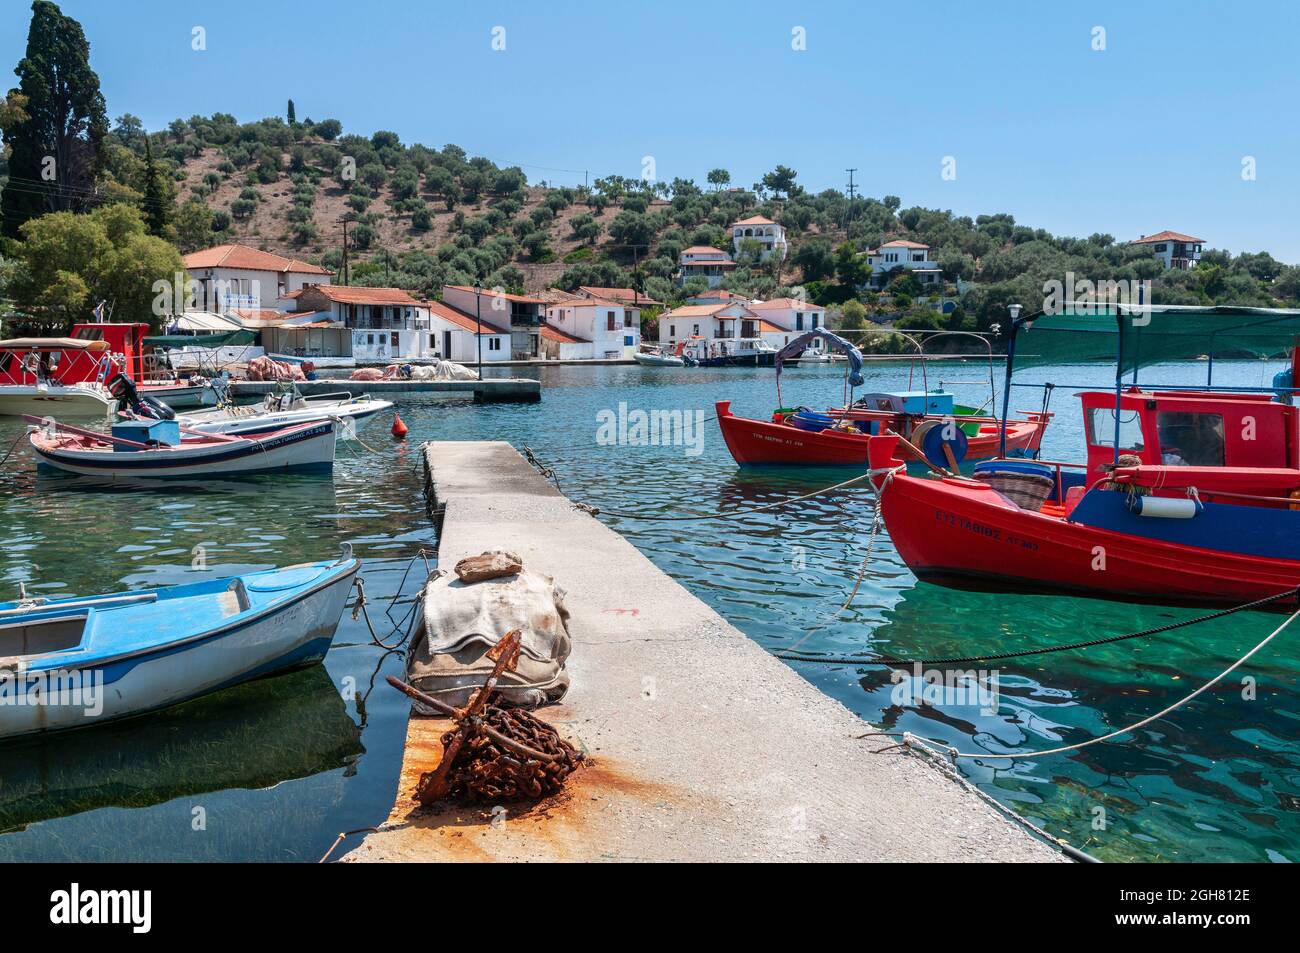 The little harbour at Paleo Trkeri on the island of Palio Trikeri on the southern coast of the Pelion Peninsula, Greece Stock Photo